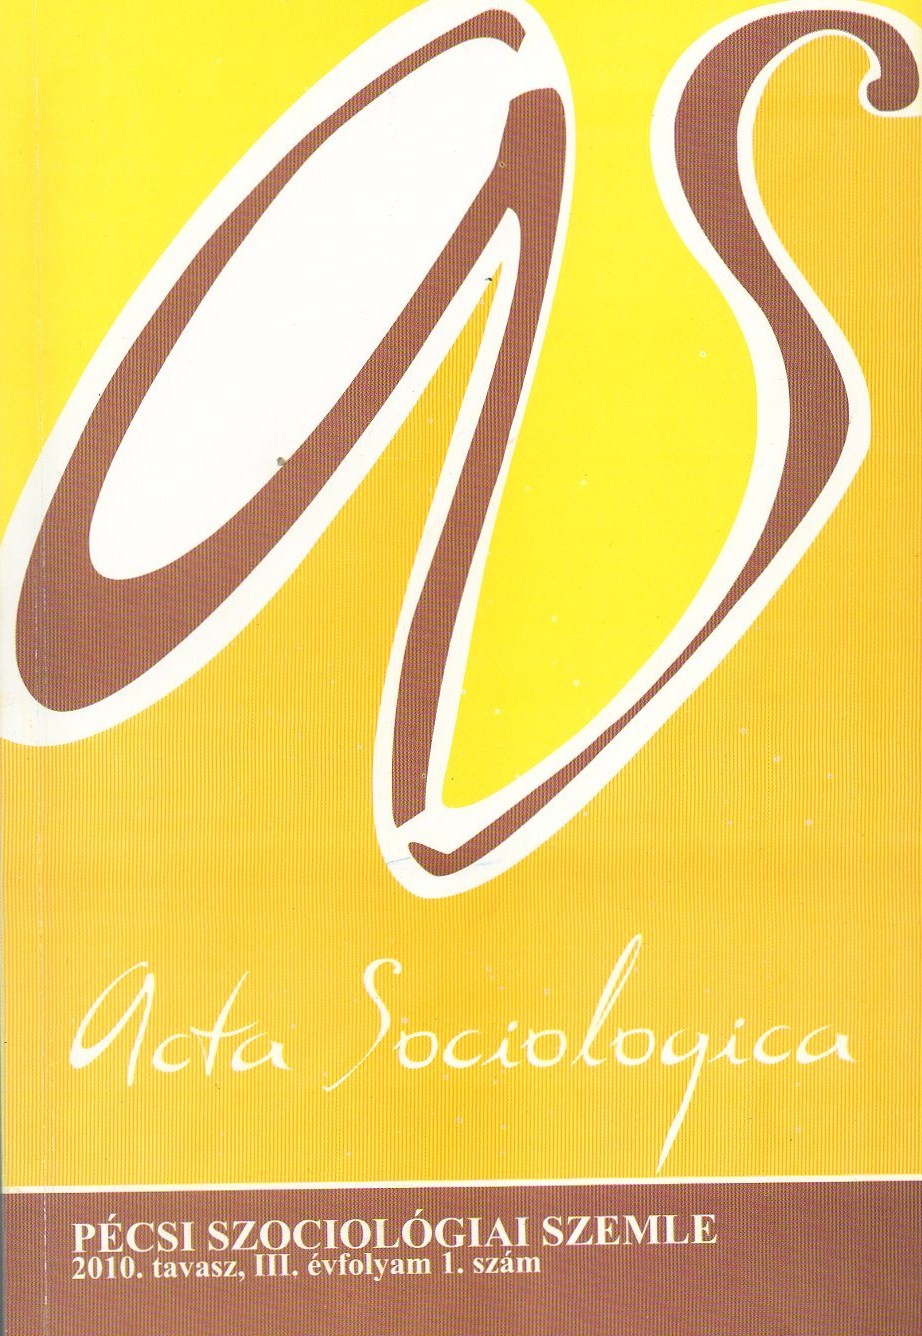 					View Vol. 3 No. 1 (2010): Acta Sociologica - Pécsi Szociológiai Szemle
				